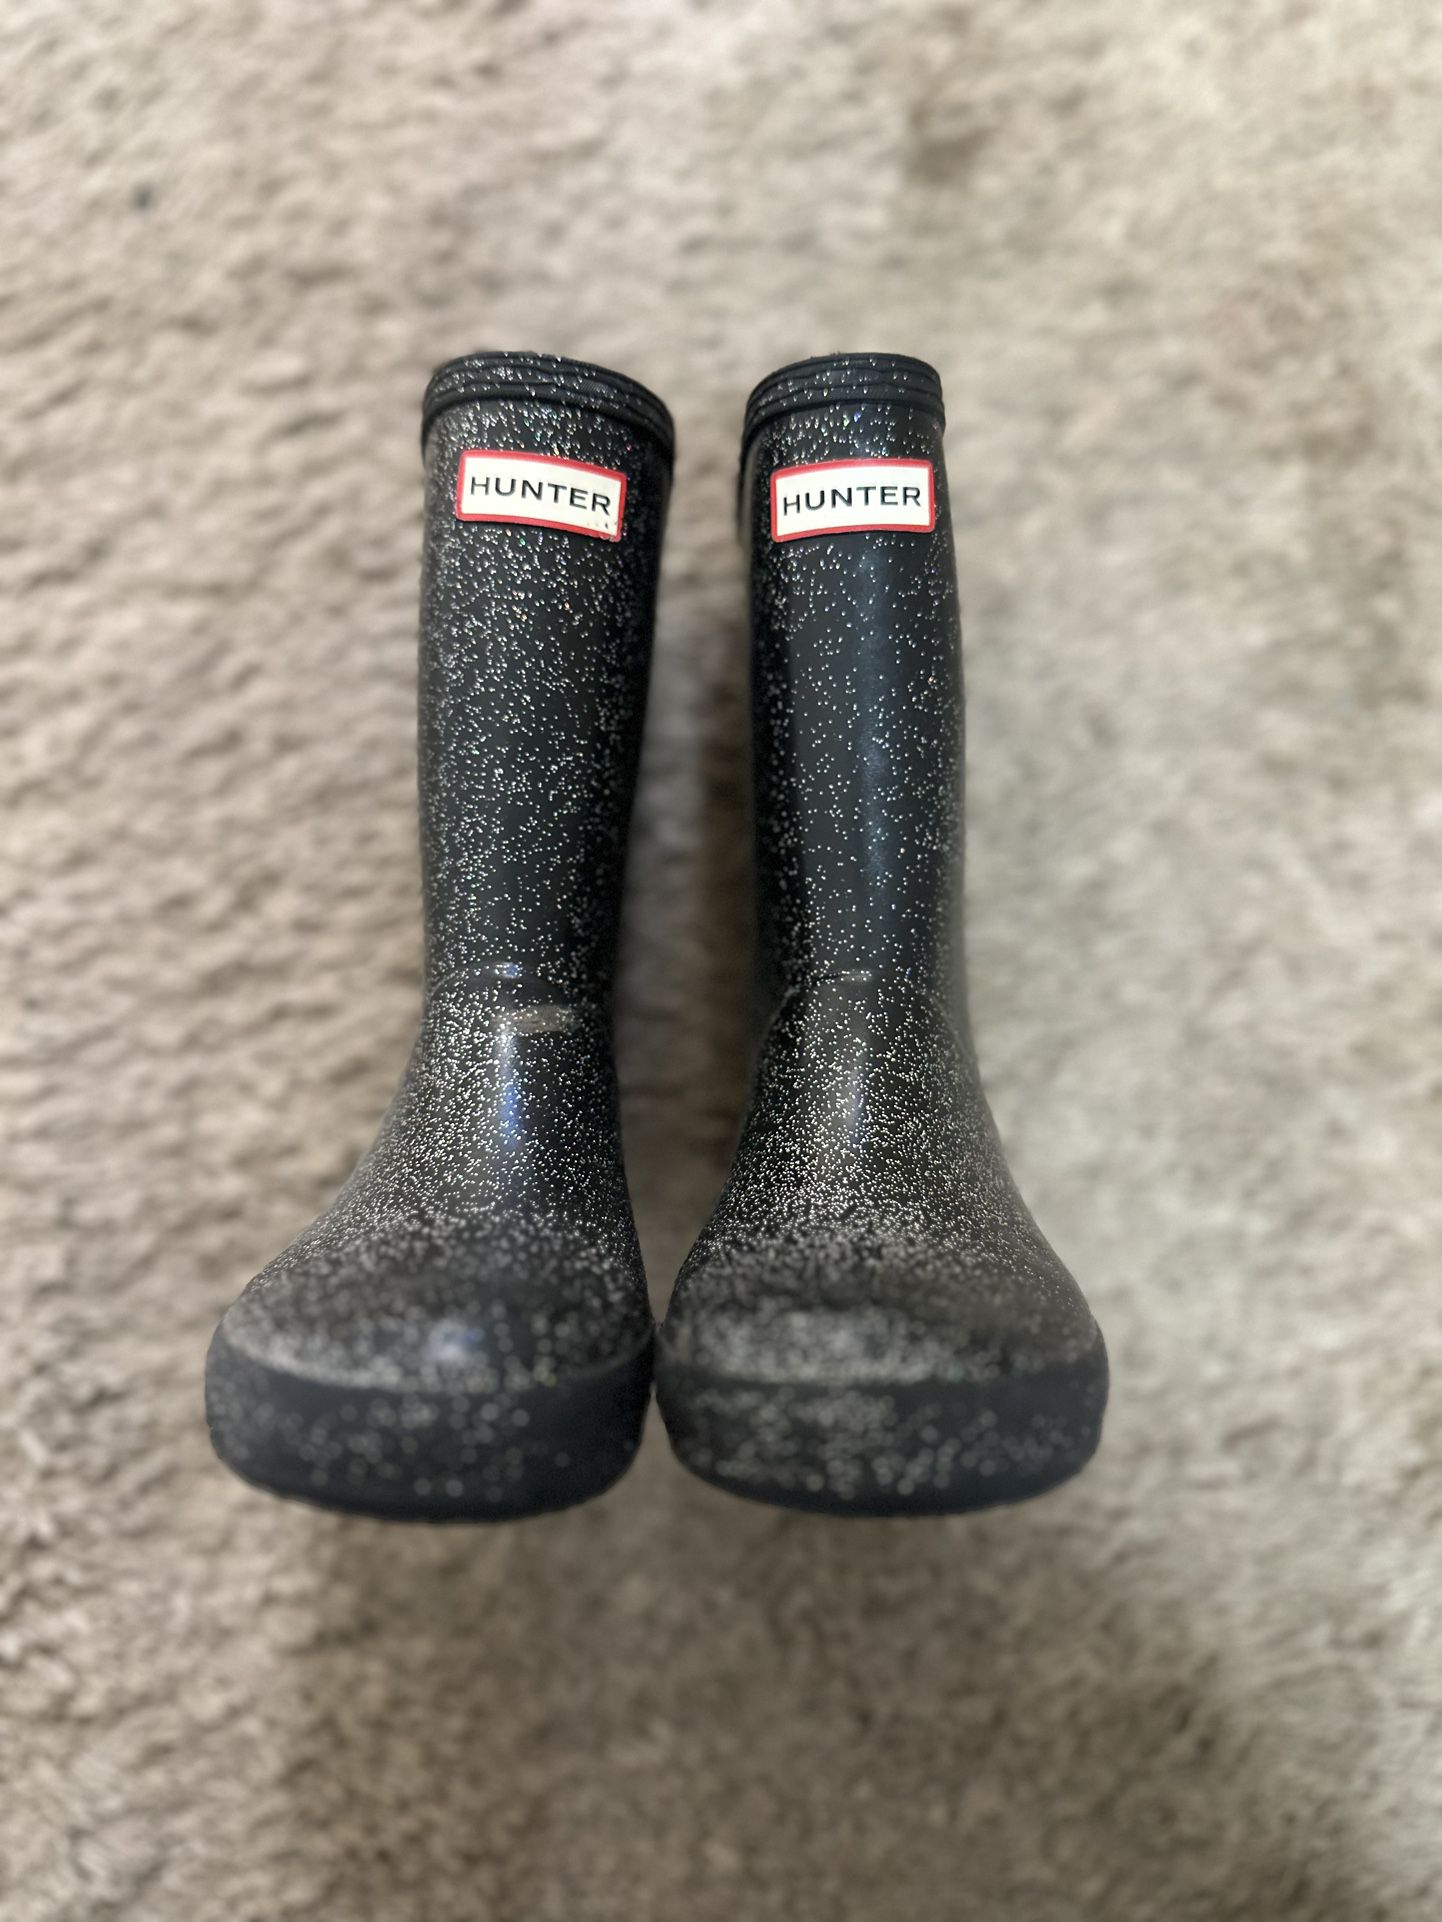 Toddler Size 11 Sparkle Rain Boots